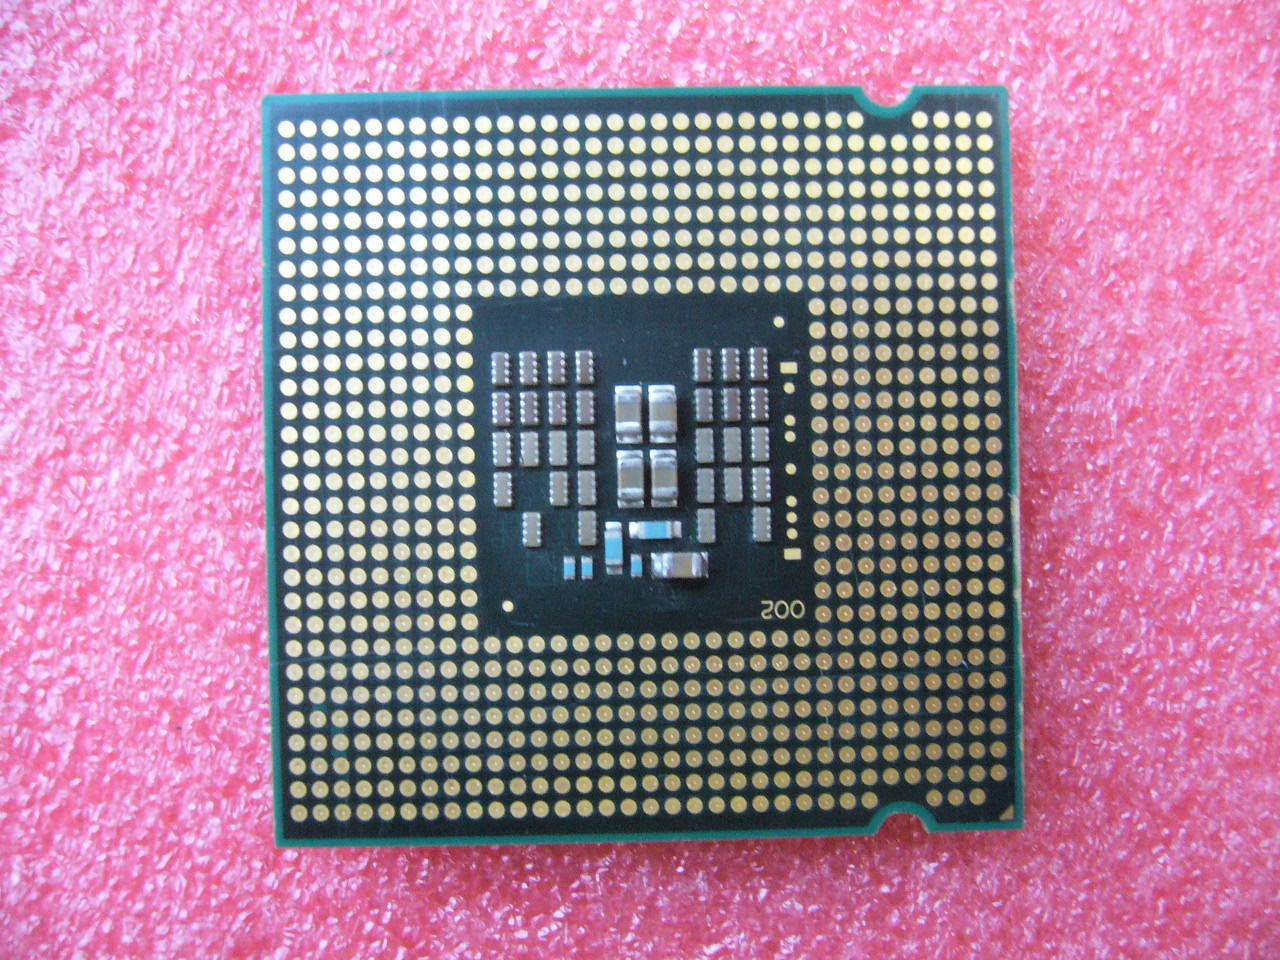 QTY 1x INTEL Core2 Quad Q8300 CPU 2.50GHz/4MB/1333Mhz LGA775 SLGUR SLB5W - Click Image to Close